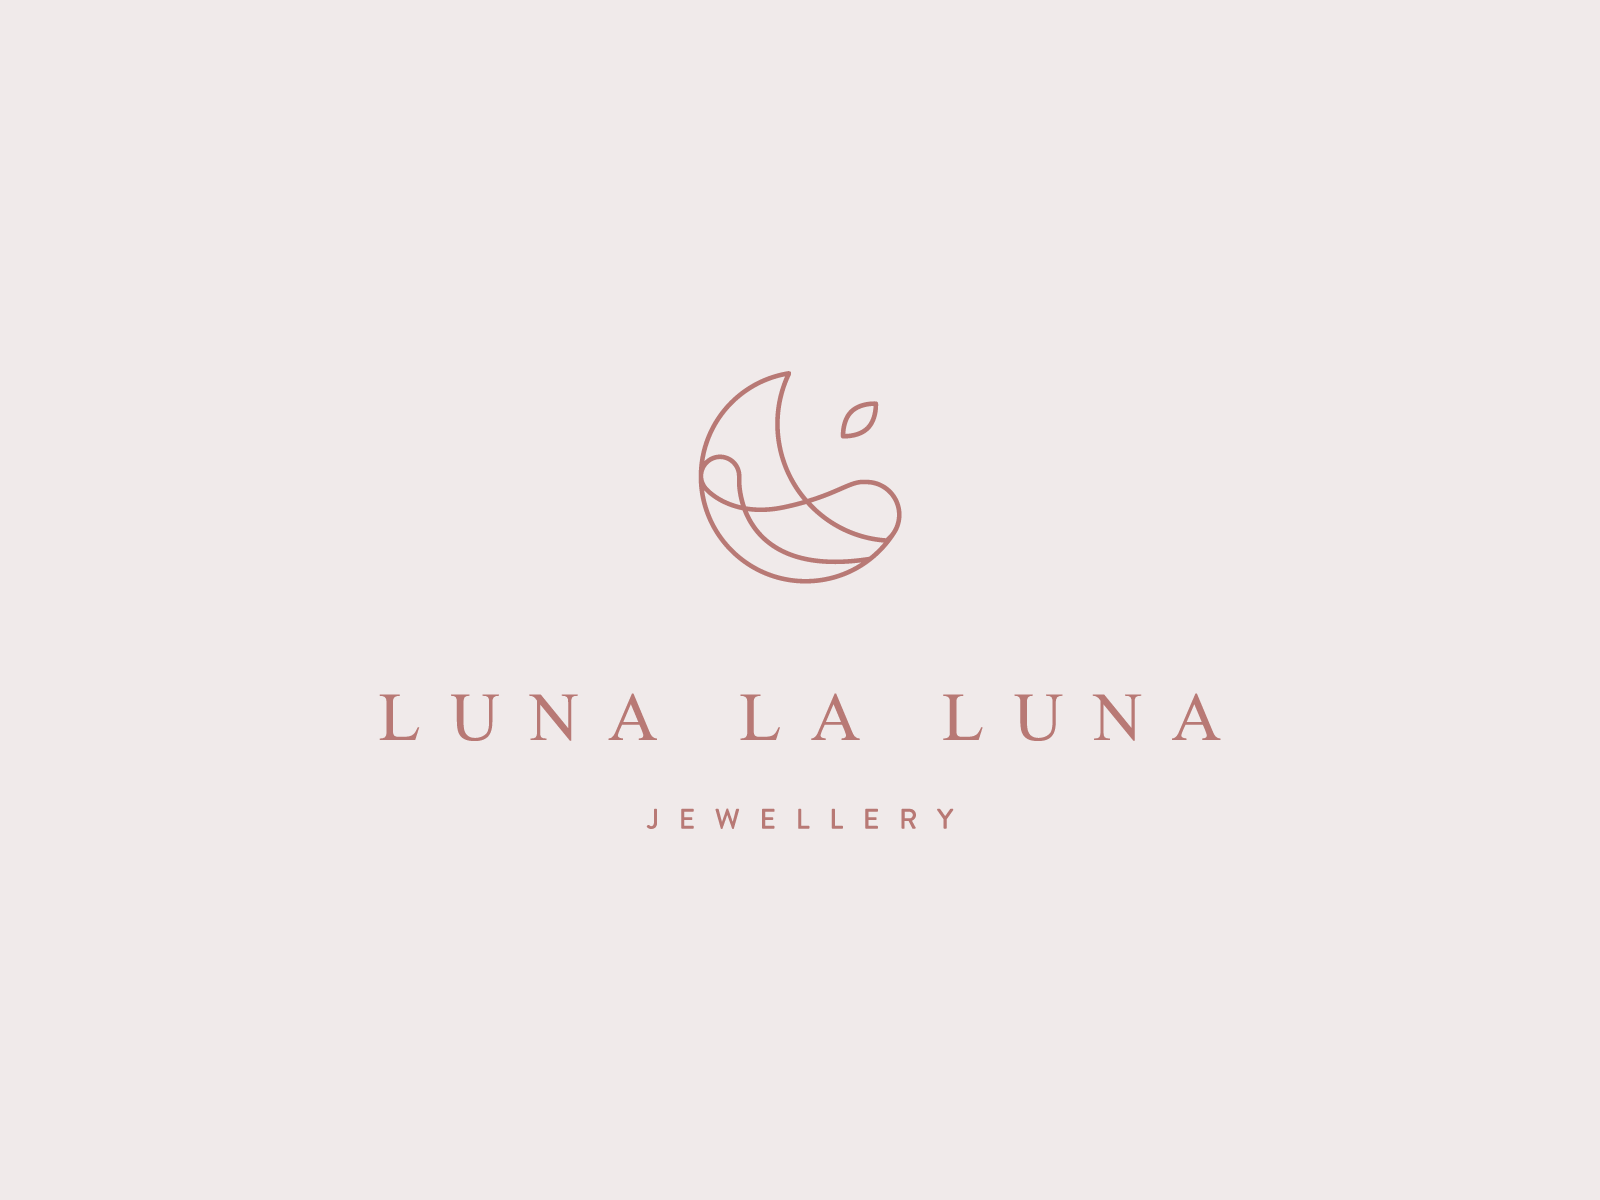 Luna Logo - Luna la Luna - logo for a jewellery brand by Maja Reguła | Dribbble ...